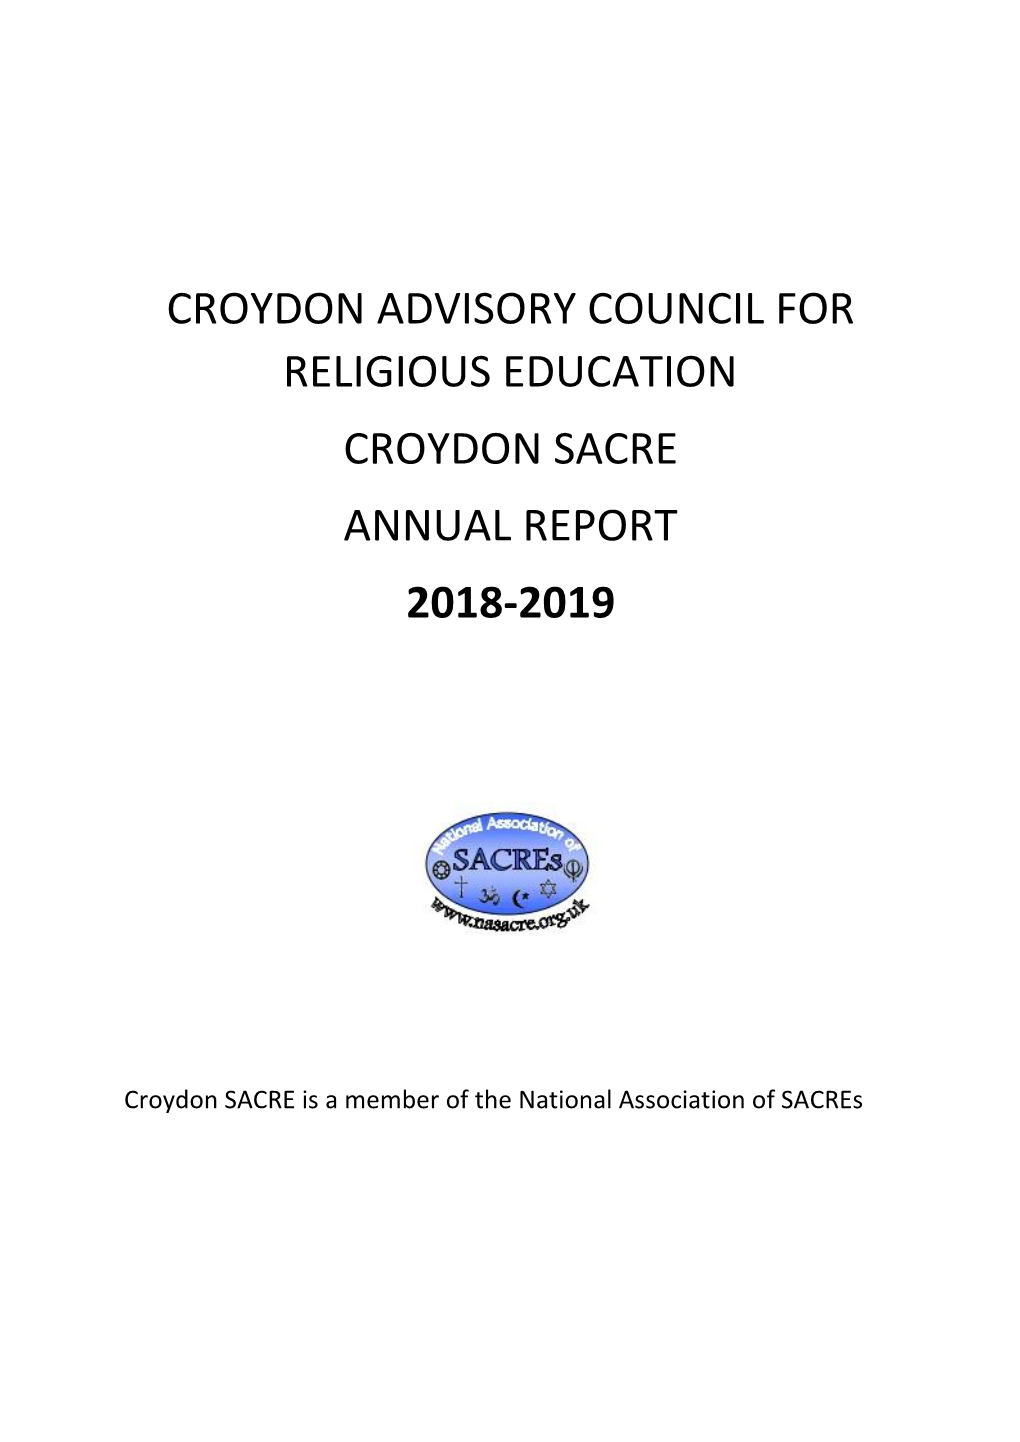 Croydon Advisory Council for Religious Education Croydon Sacre Annual Report 2018-2019